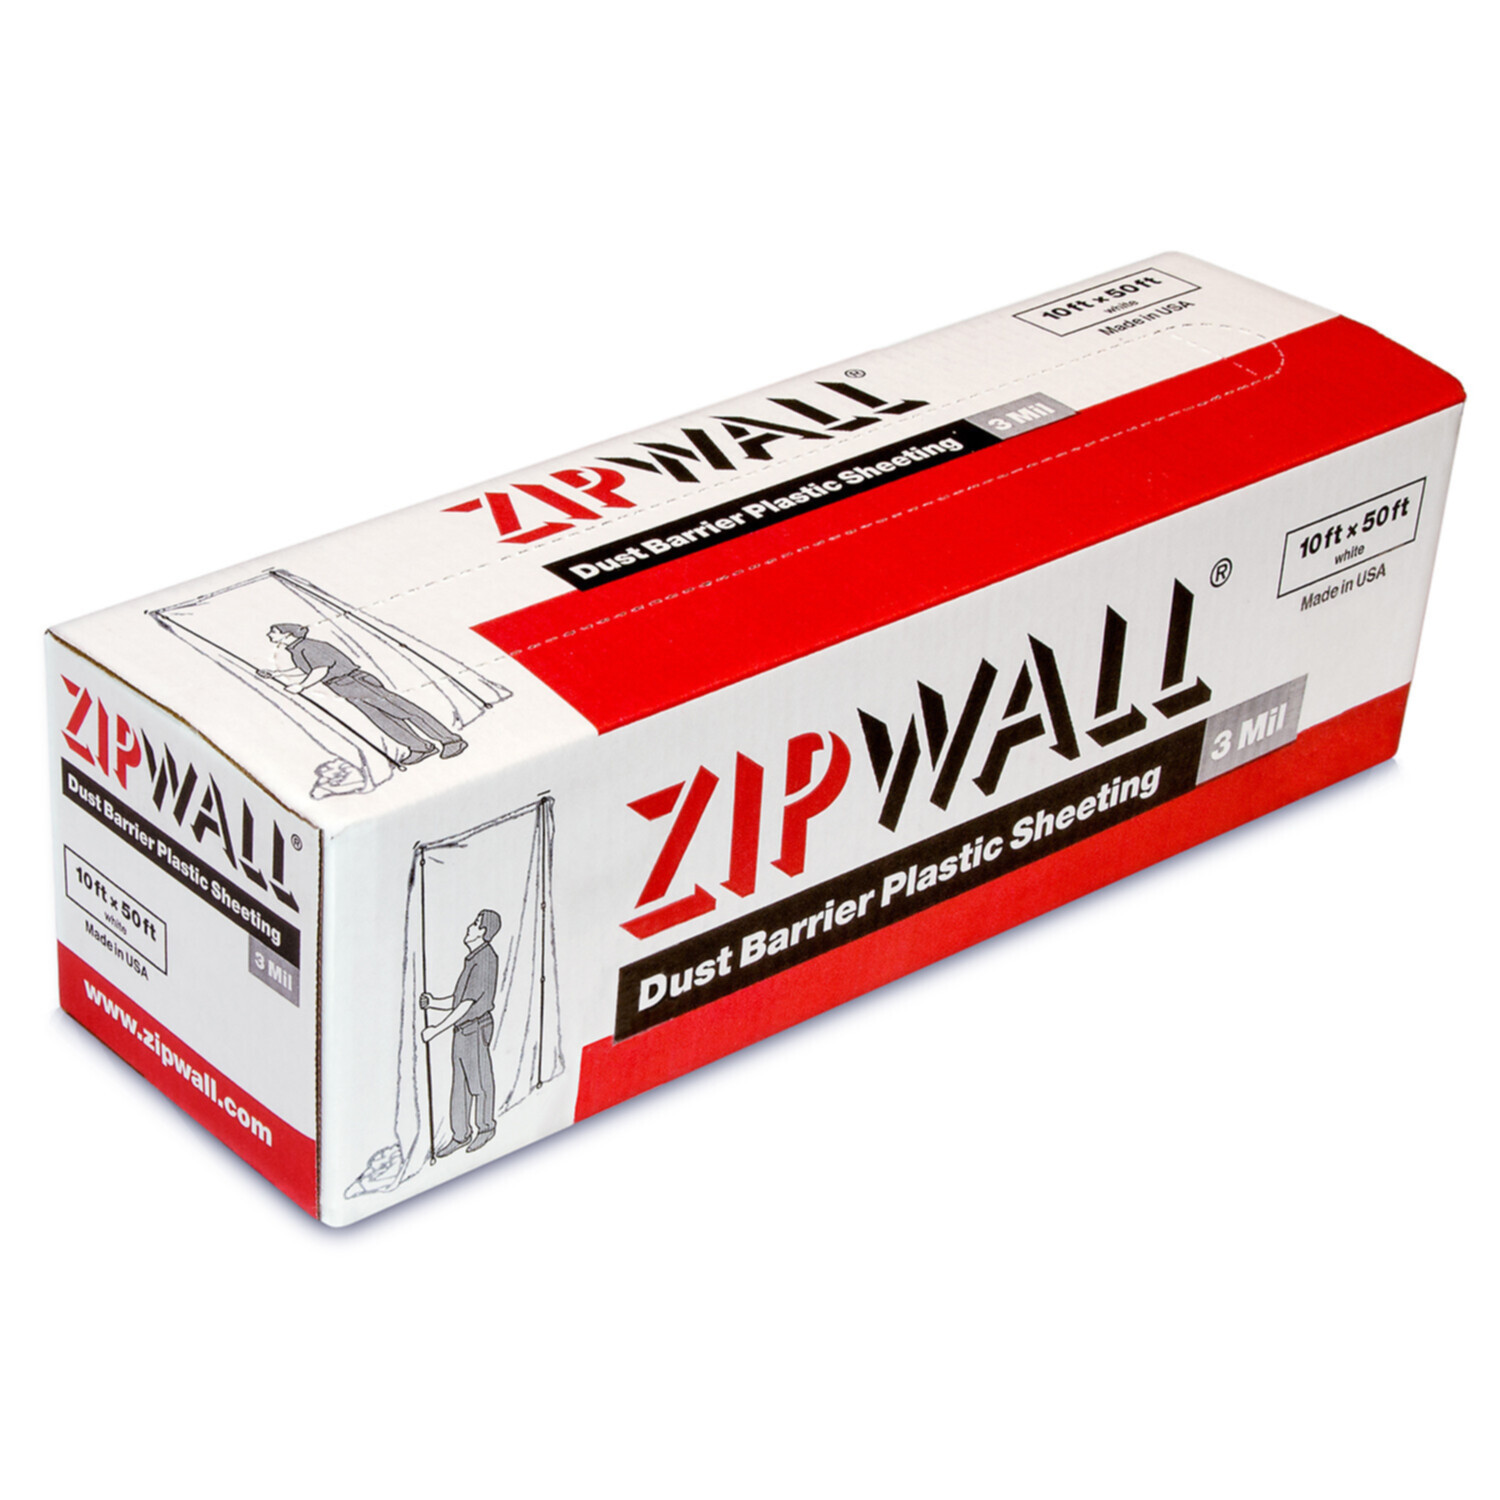 ZipWall® (PY50) Dust Barrier Plastic Sheeting